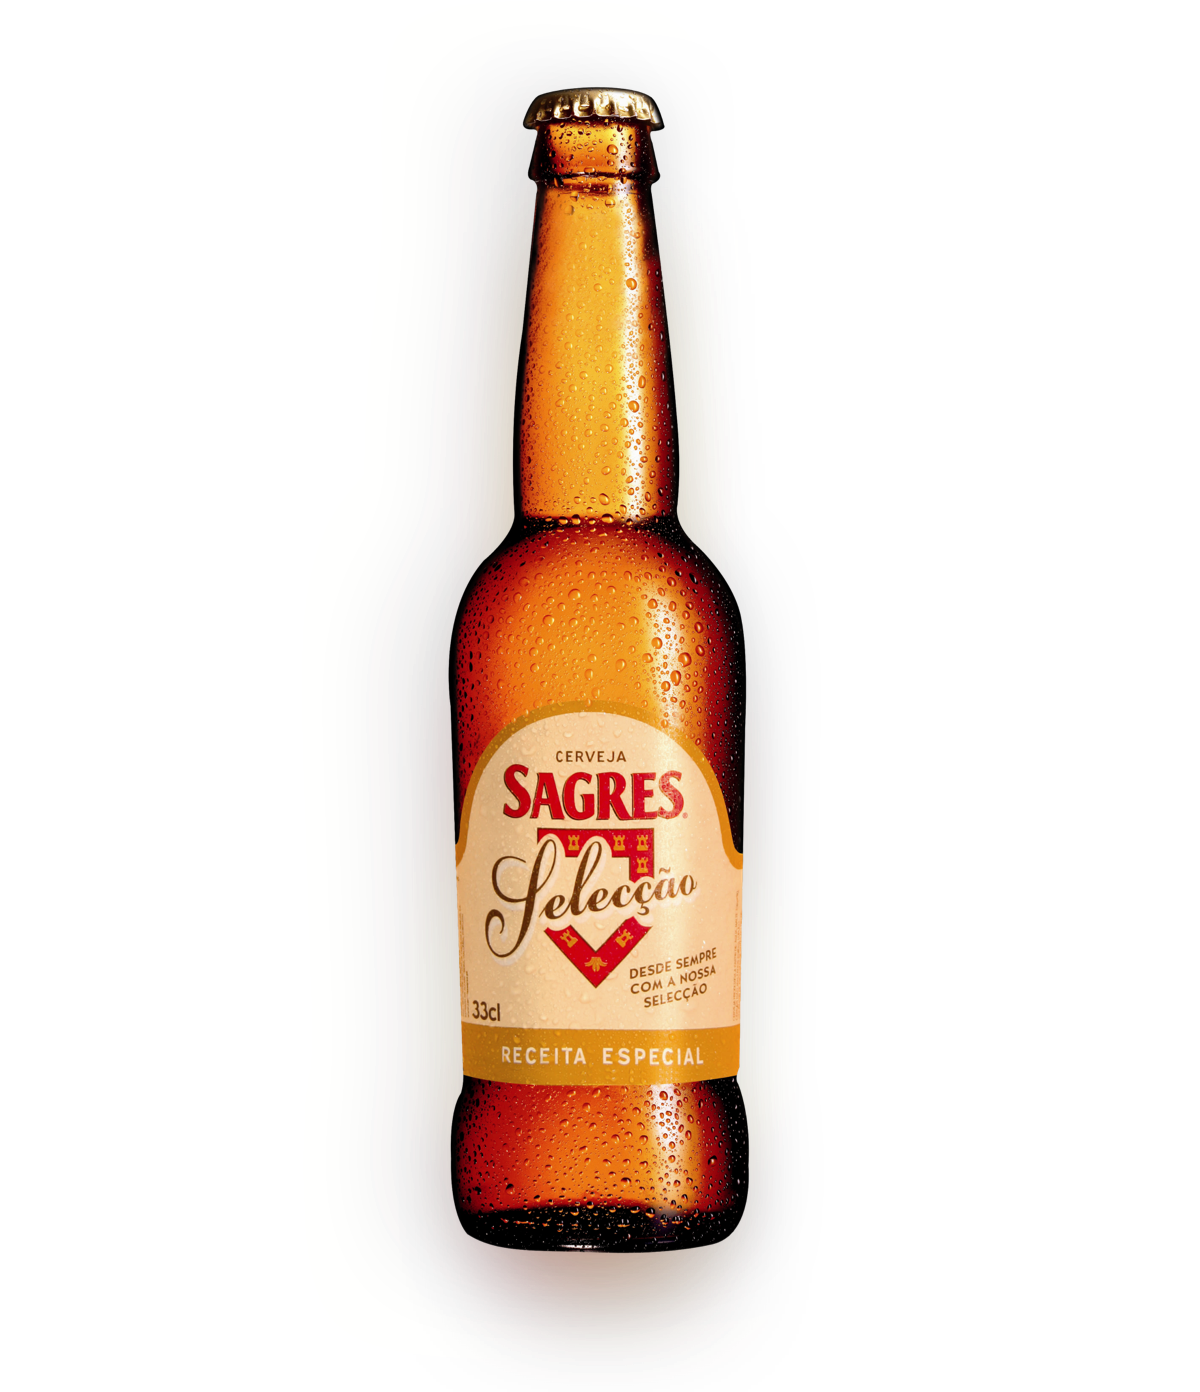 Desperados Beer Bottle Decal - Pro Sport Stickers